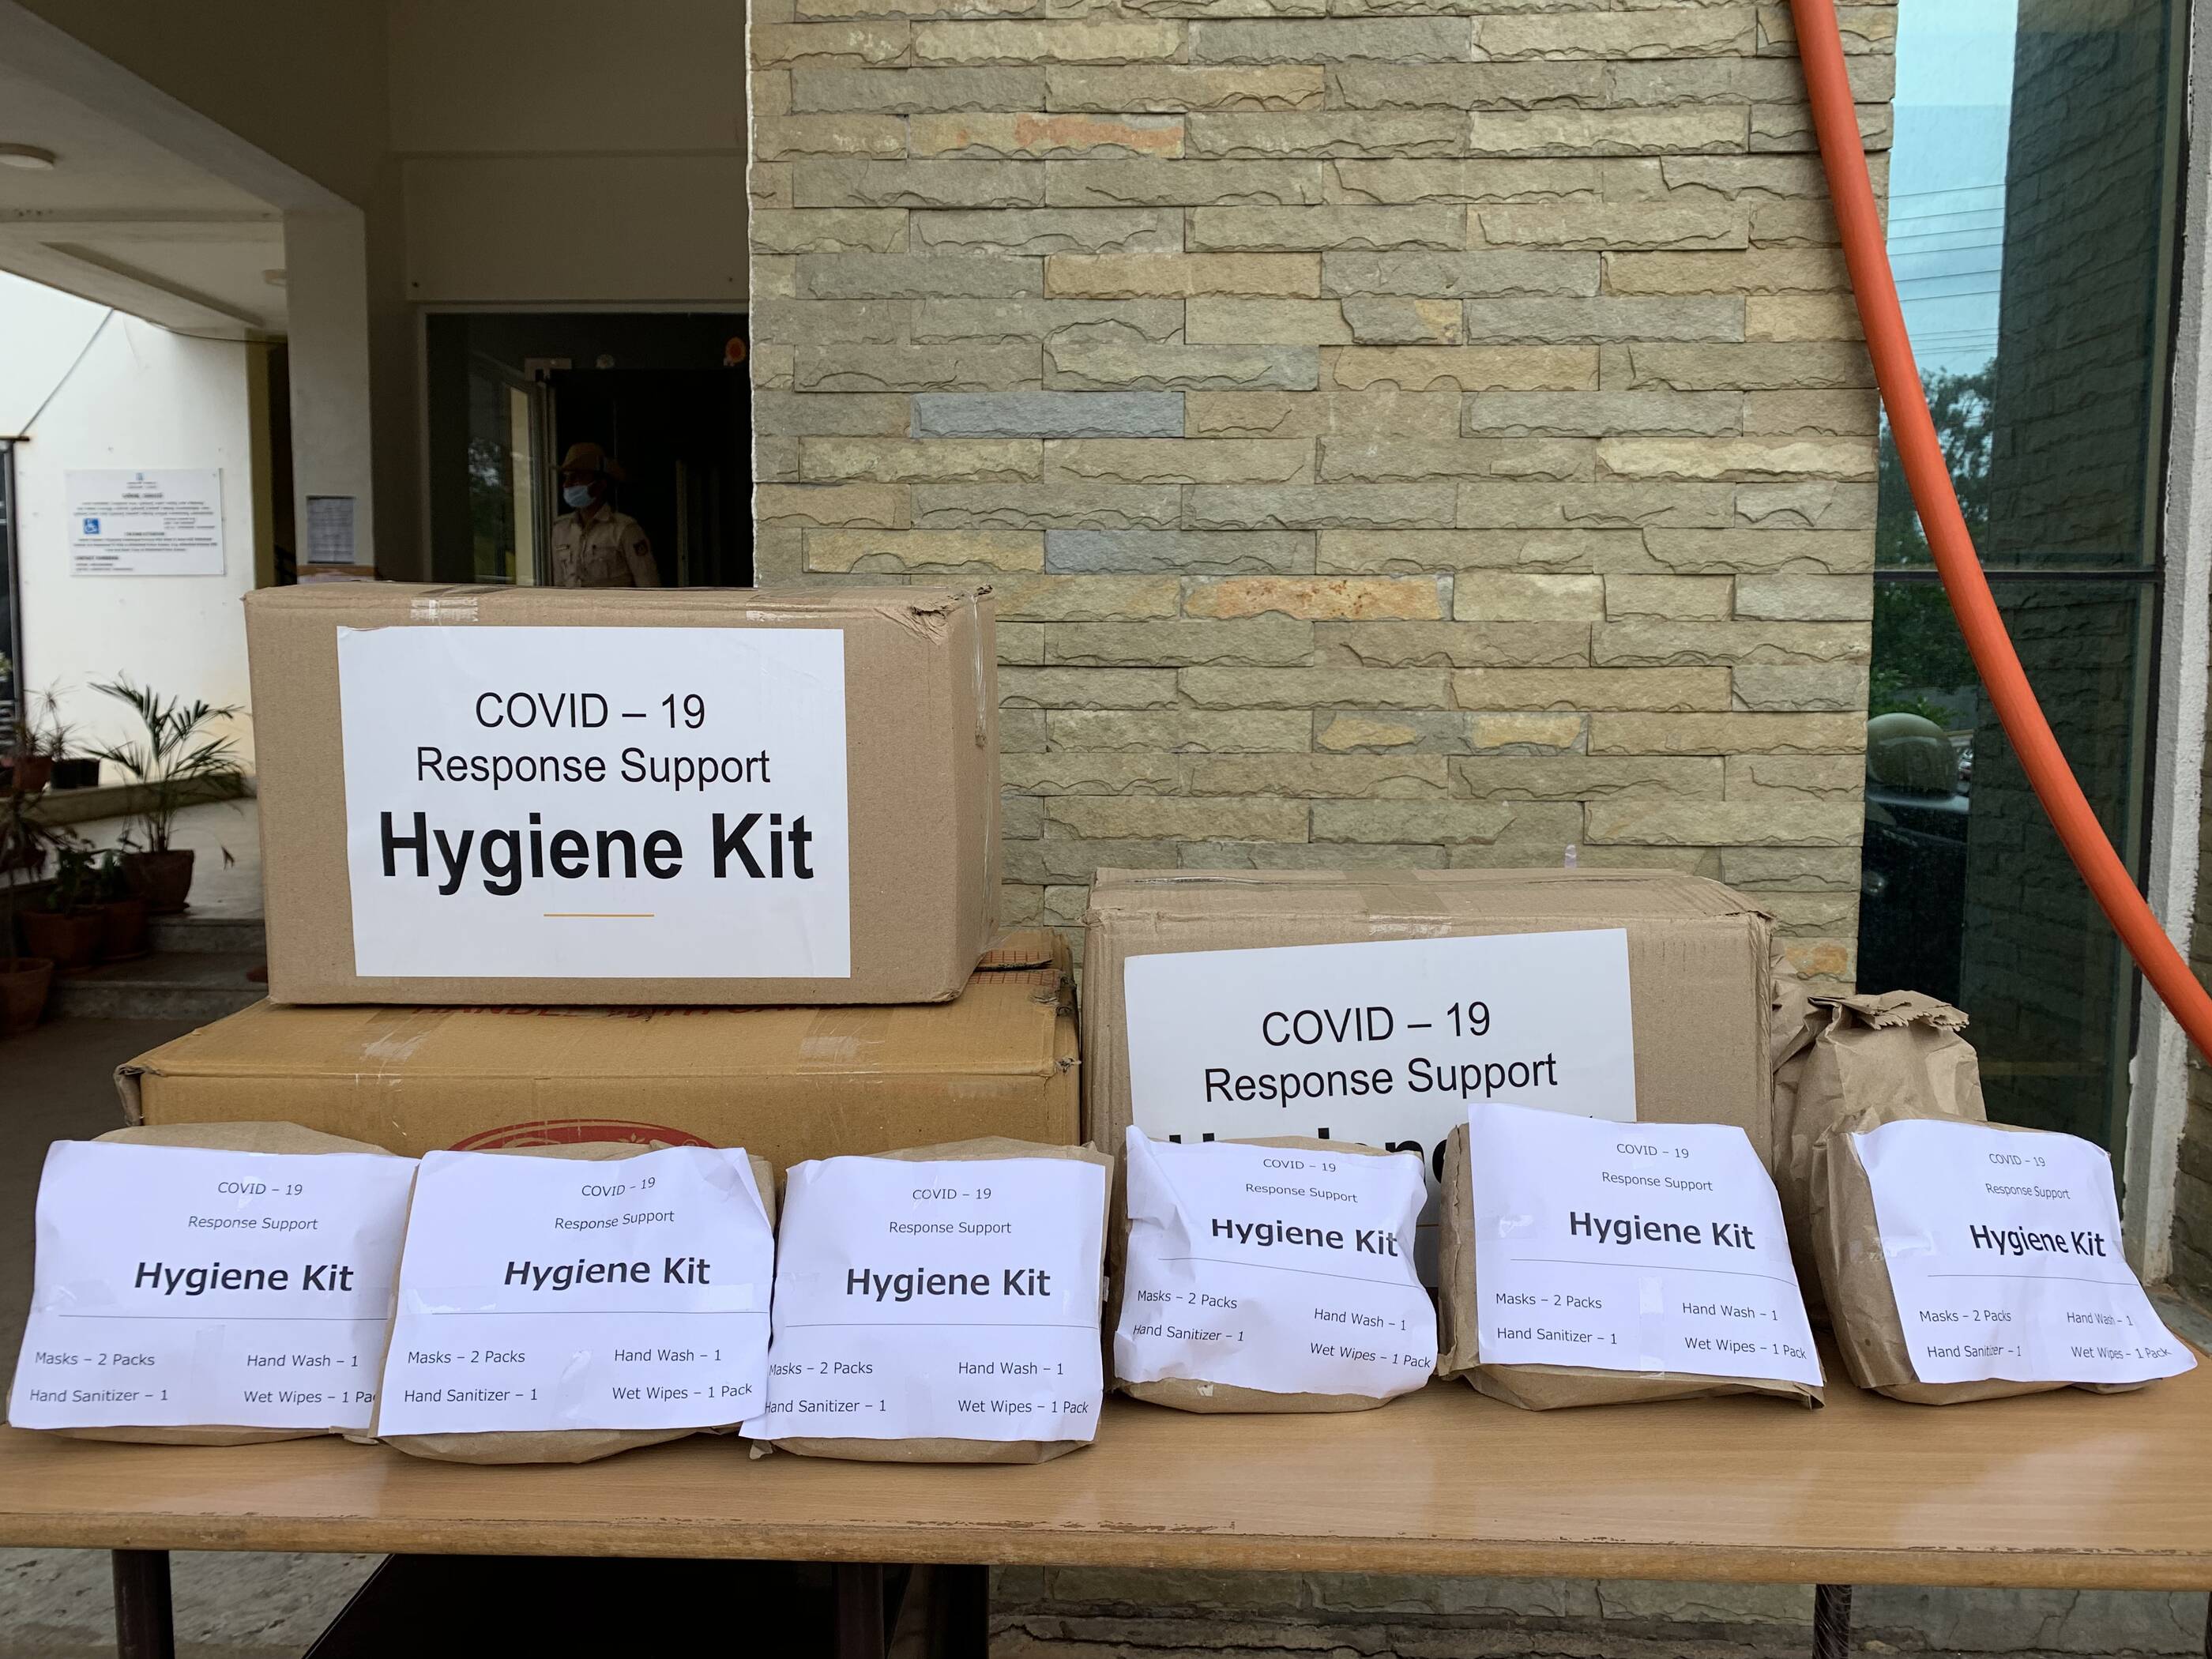 COVID-19 hygiene kits for distribution